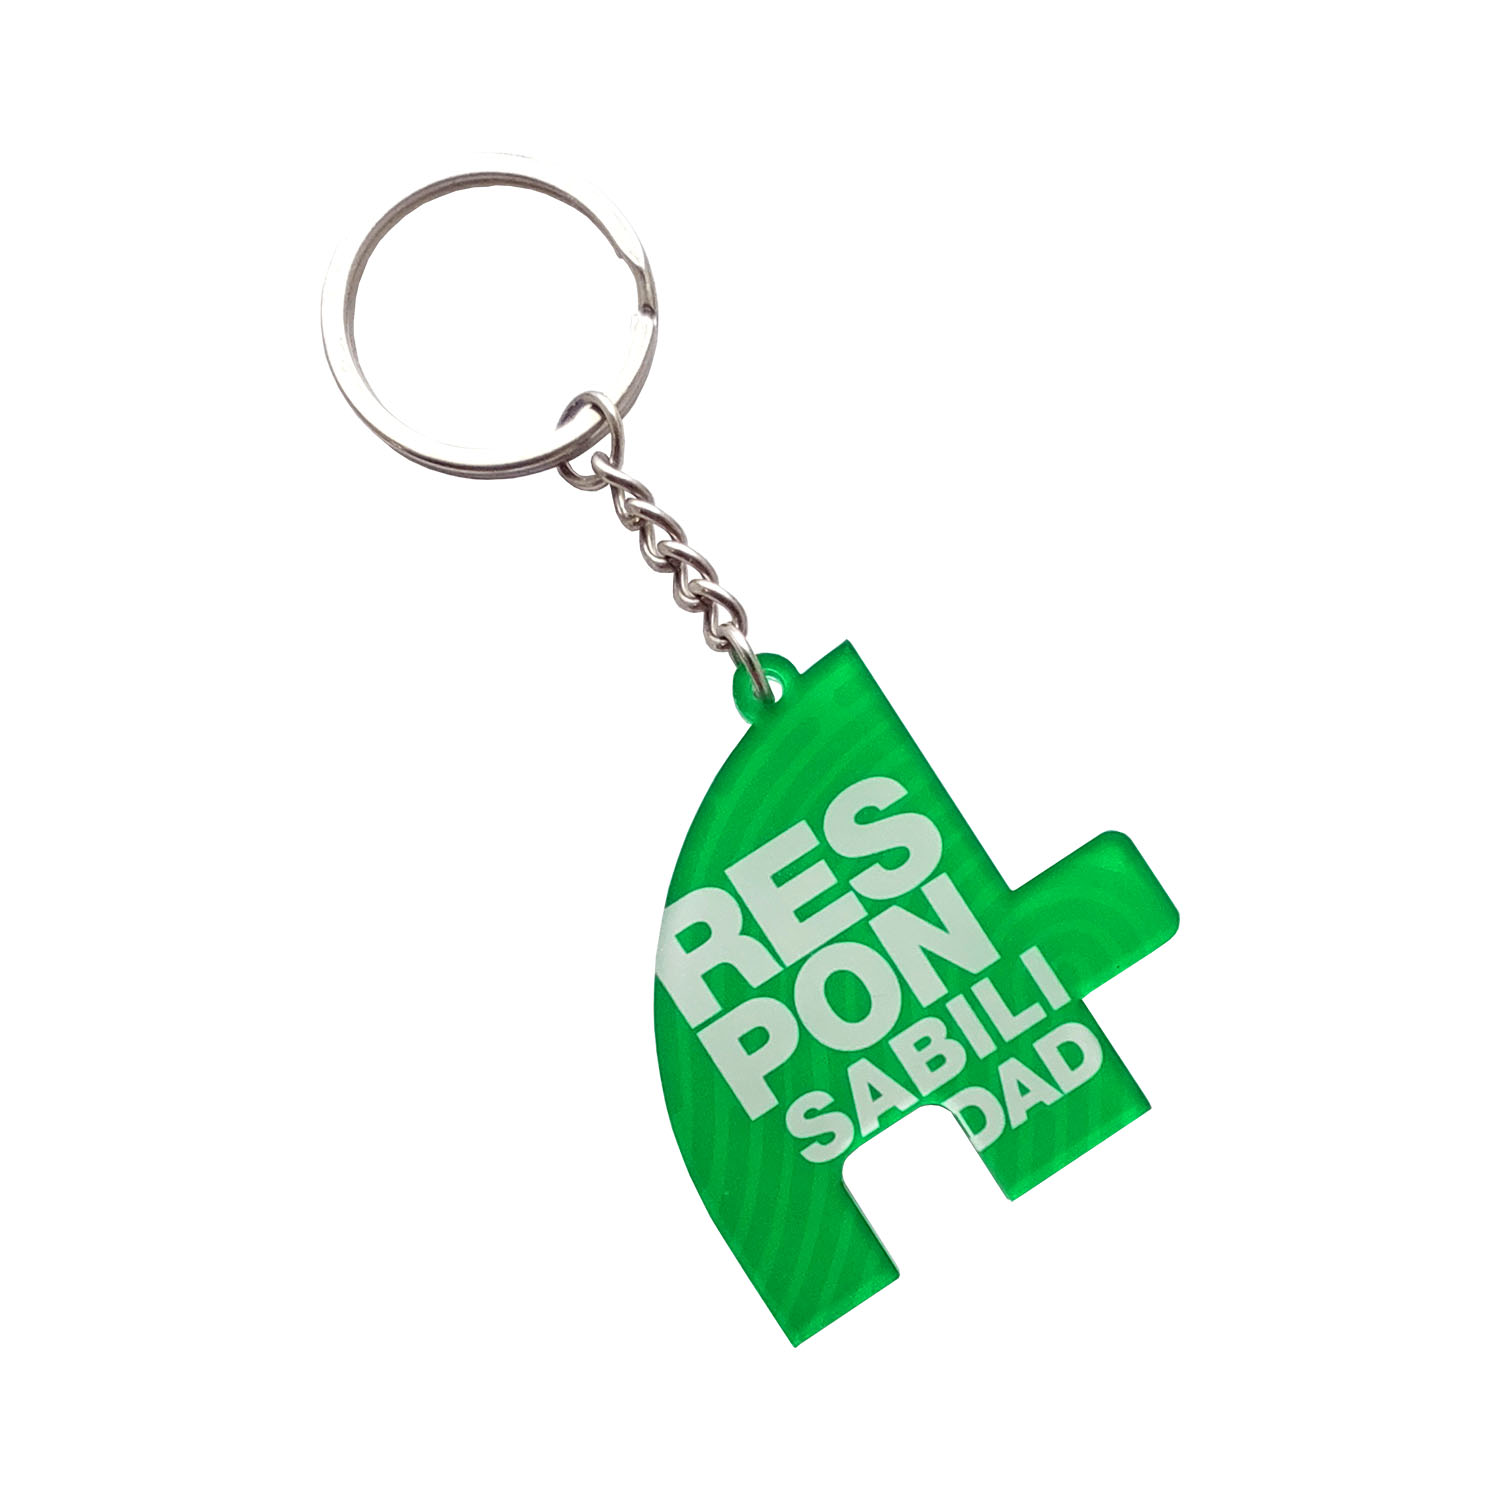 Buy Custom Keychains Online - Design Keychains With Text, Photo & Logo 